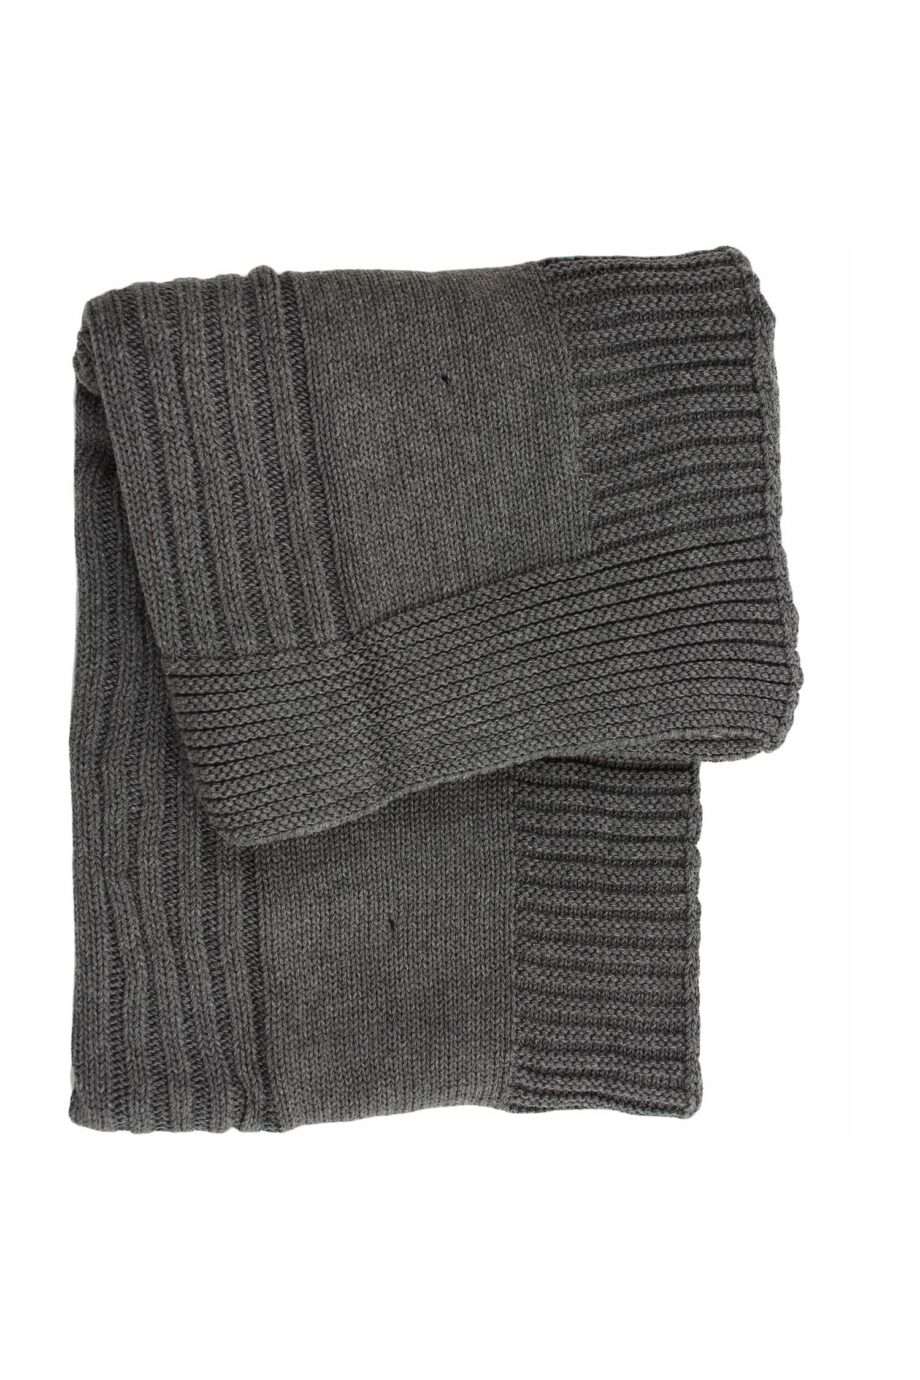 anthracite knitted cotton little blanket medium